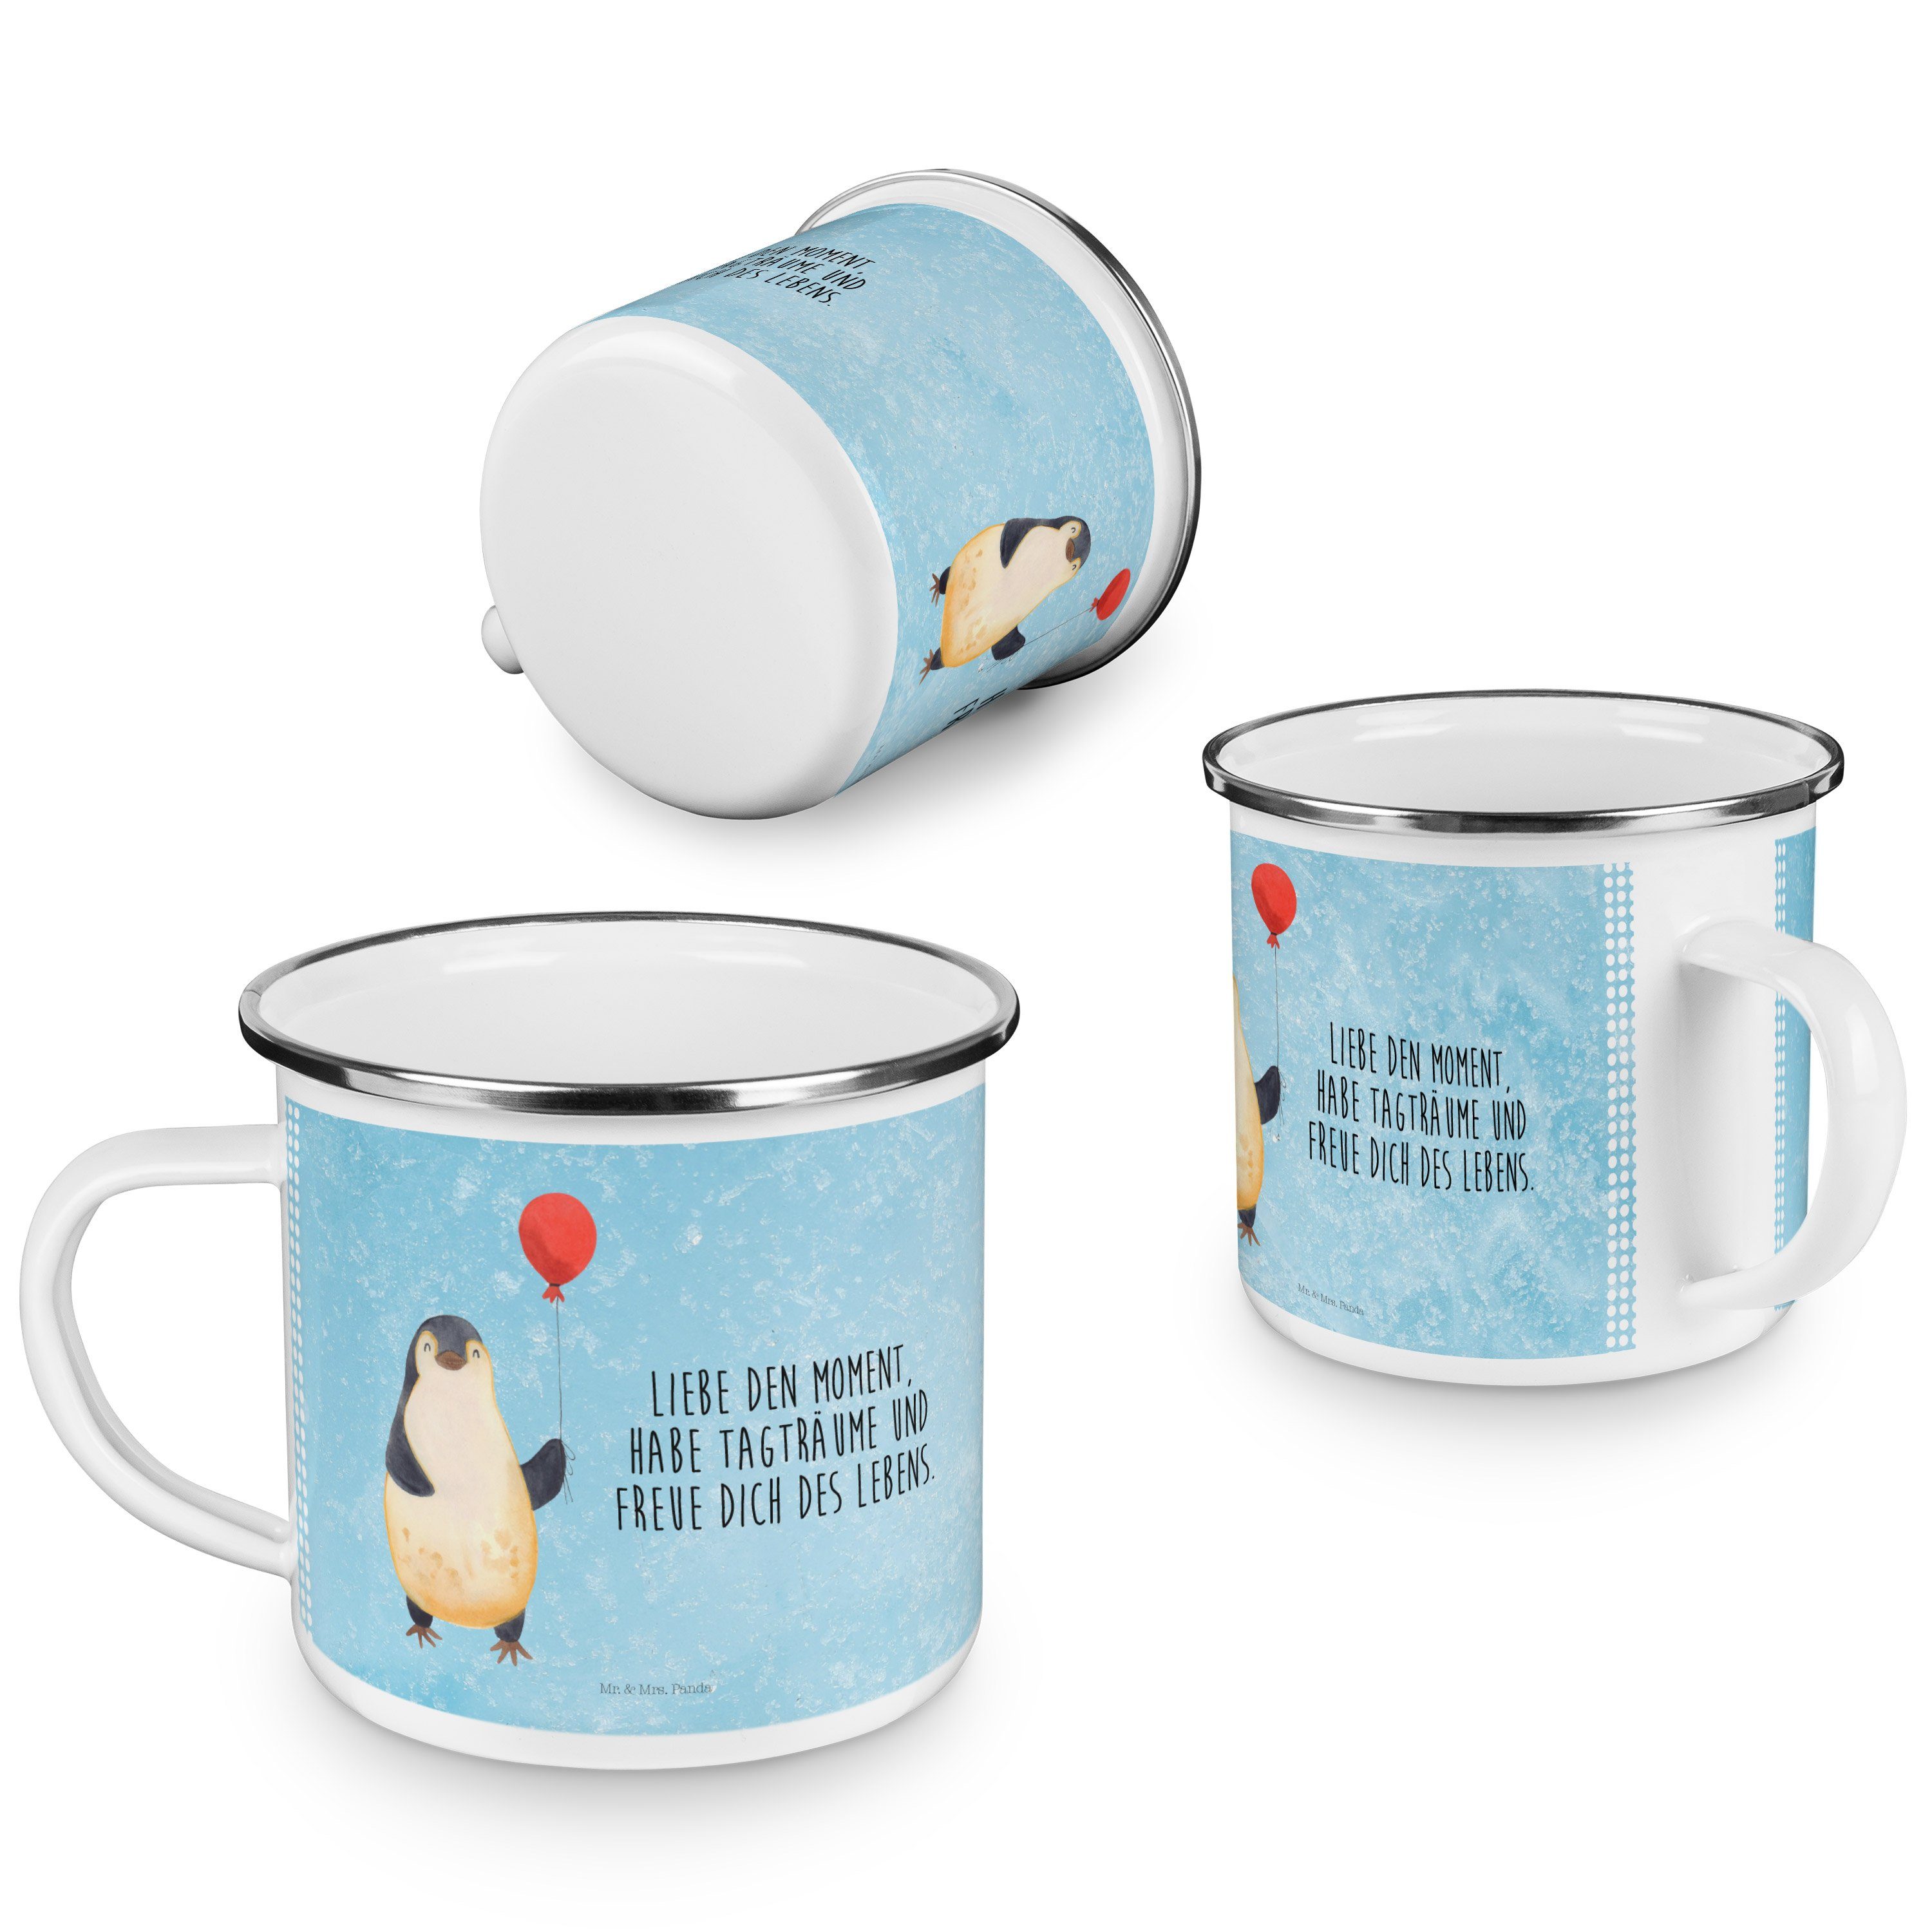 Mr. & Mrs. Panda Pinguin Tagträume, Eisblau Campingtasse, - Kin, Geschenk, Becher Emaille Luftballon 